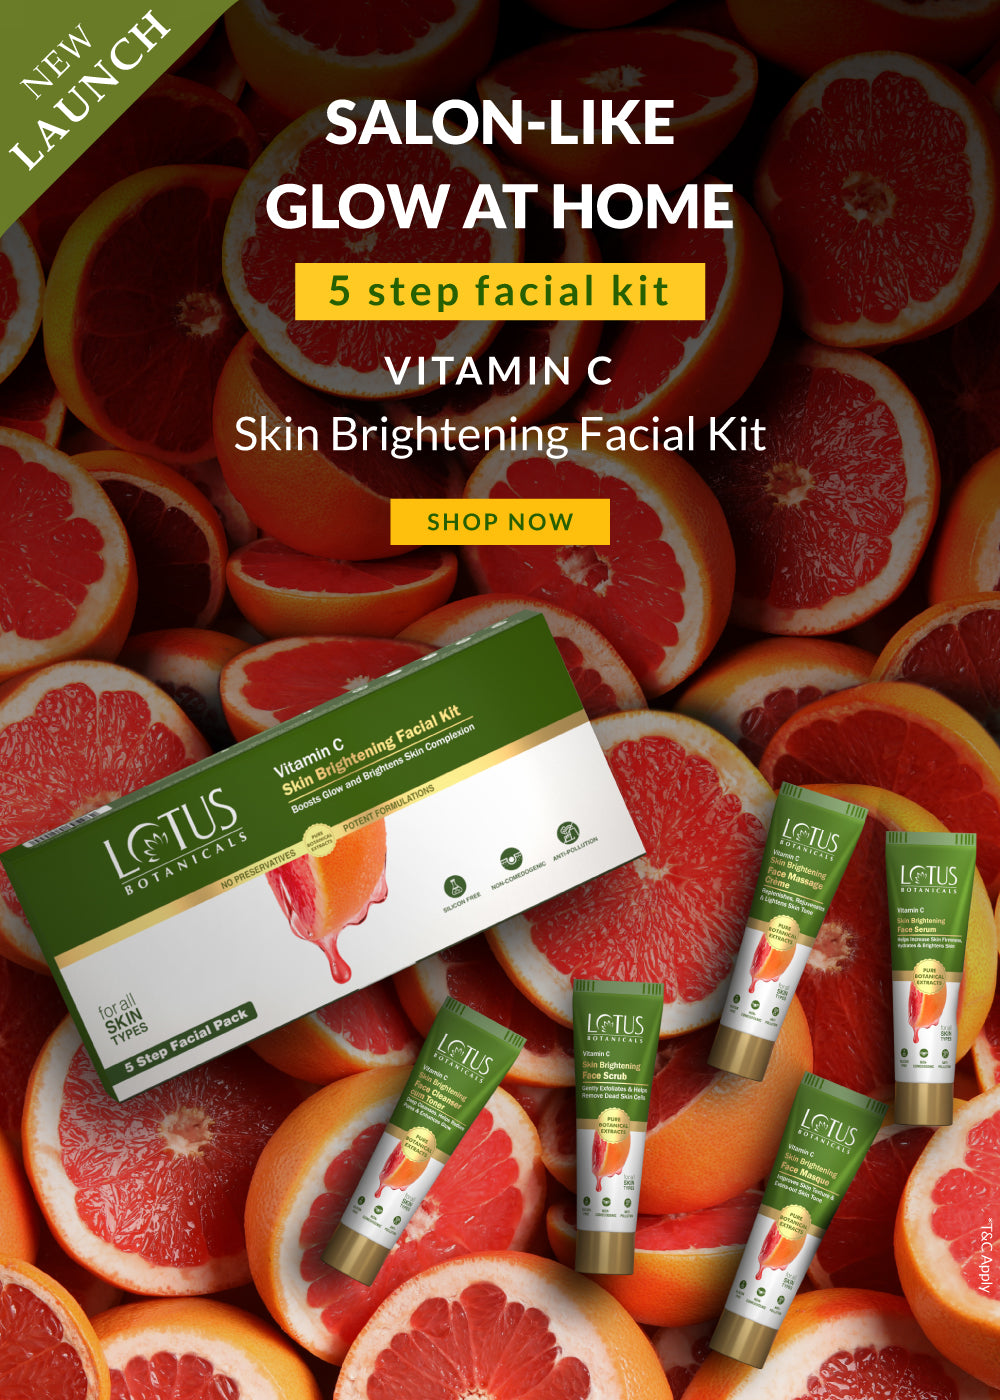 Vitamin C Skin Brightening Facial Kit